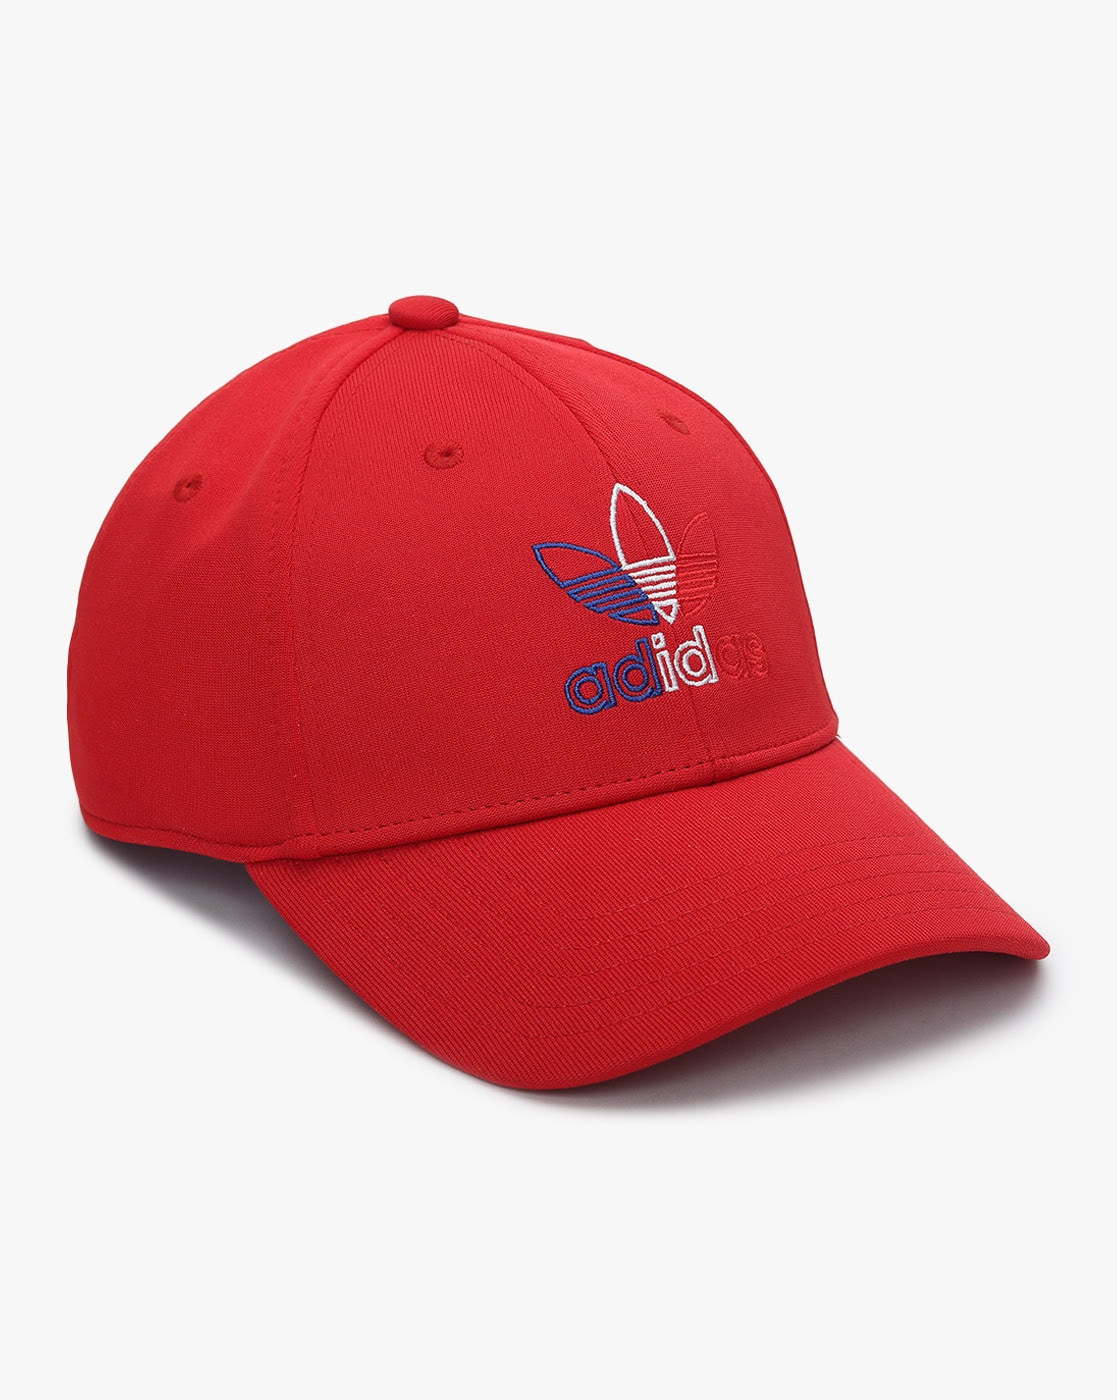 Buy Red Caps & Hats Men by Adidas Originals Online | Ajio.com